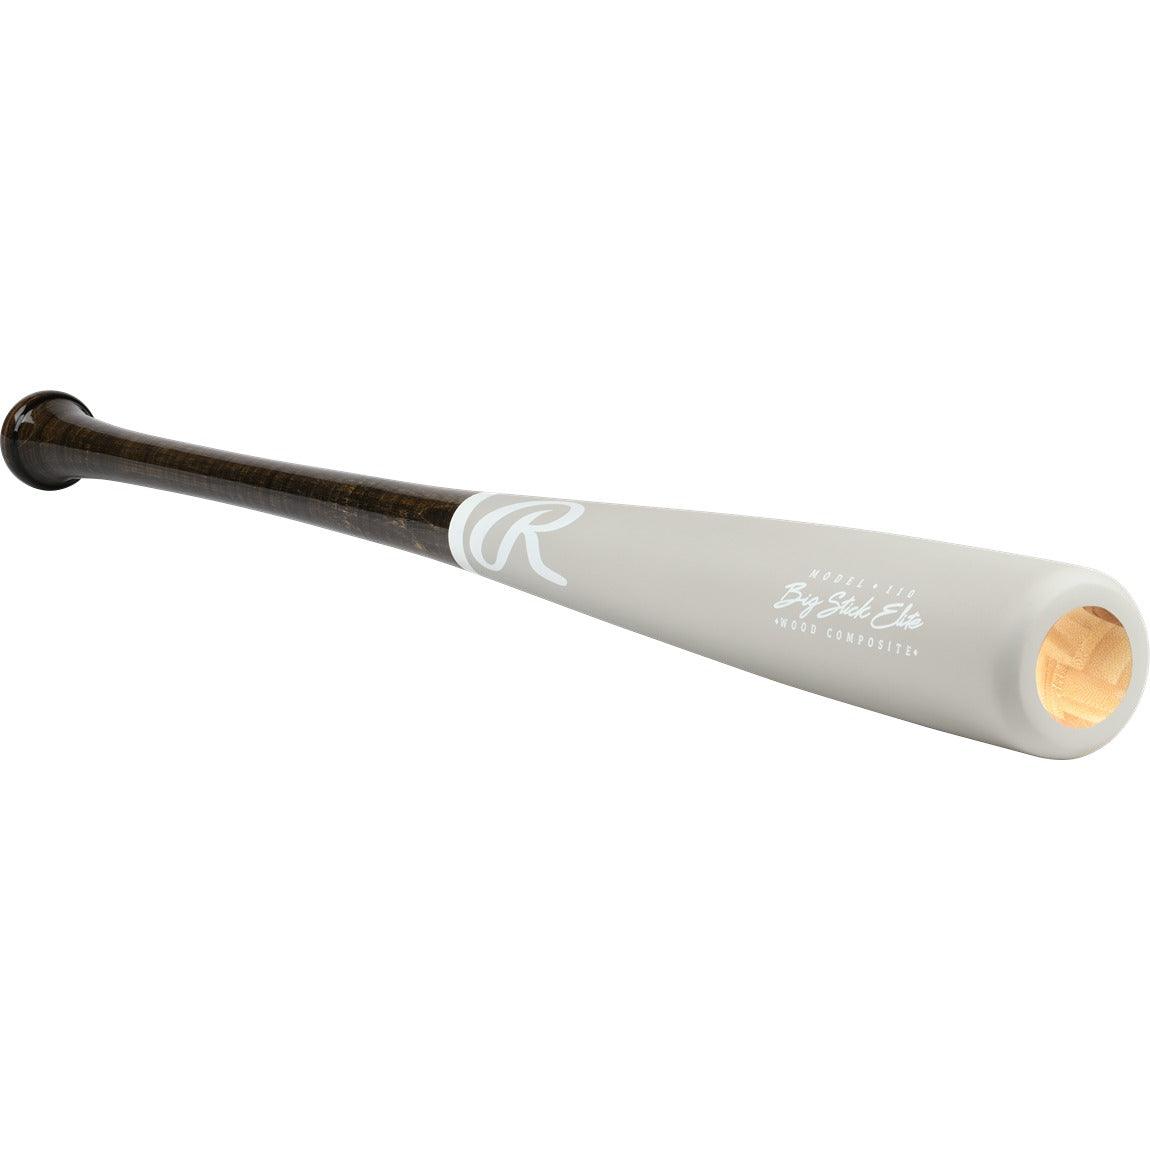 Rawlings Big Stick Elite 110 Composite Wood Baseball Bat